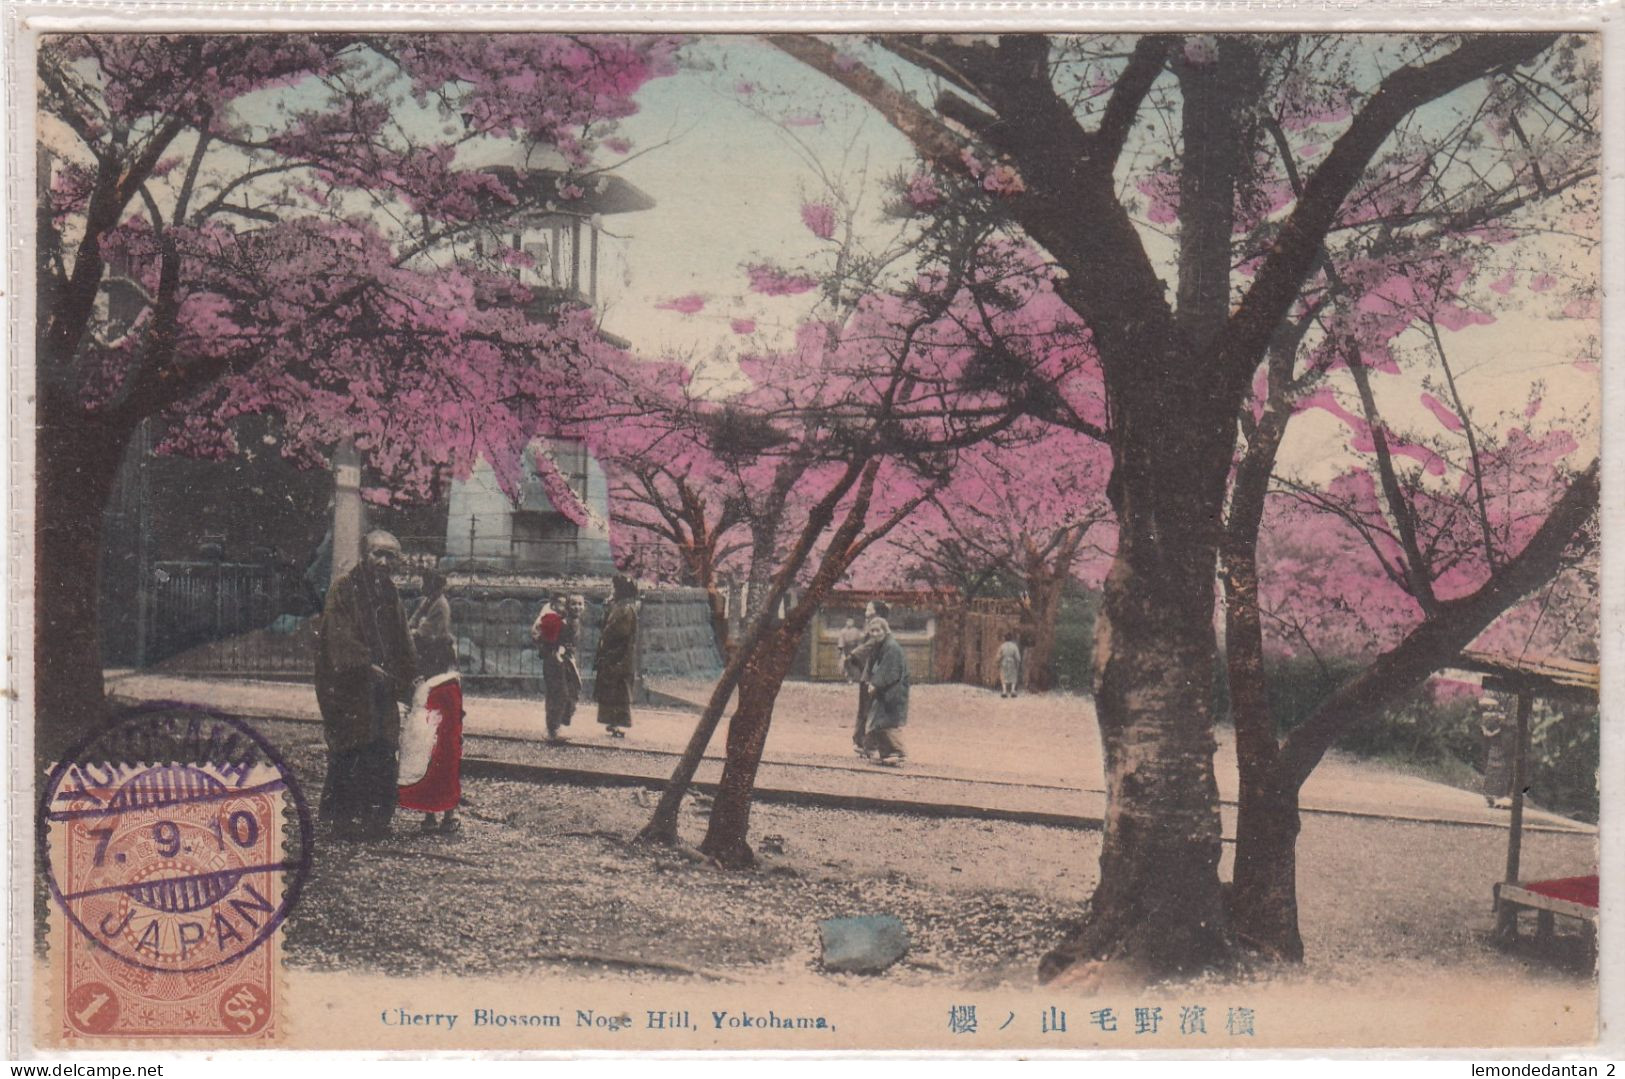 Cherry Blossom Noge Hill, Yokohama Park. * - Yokohama